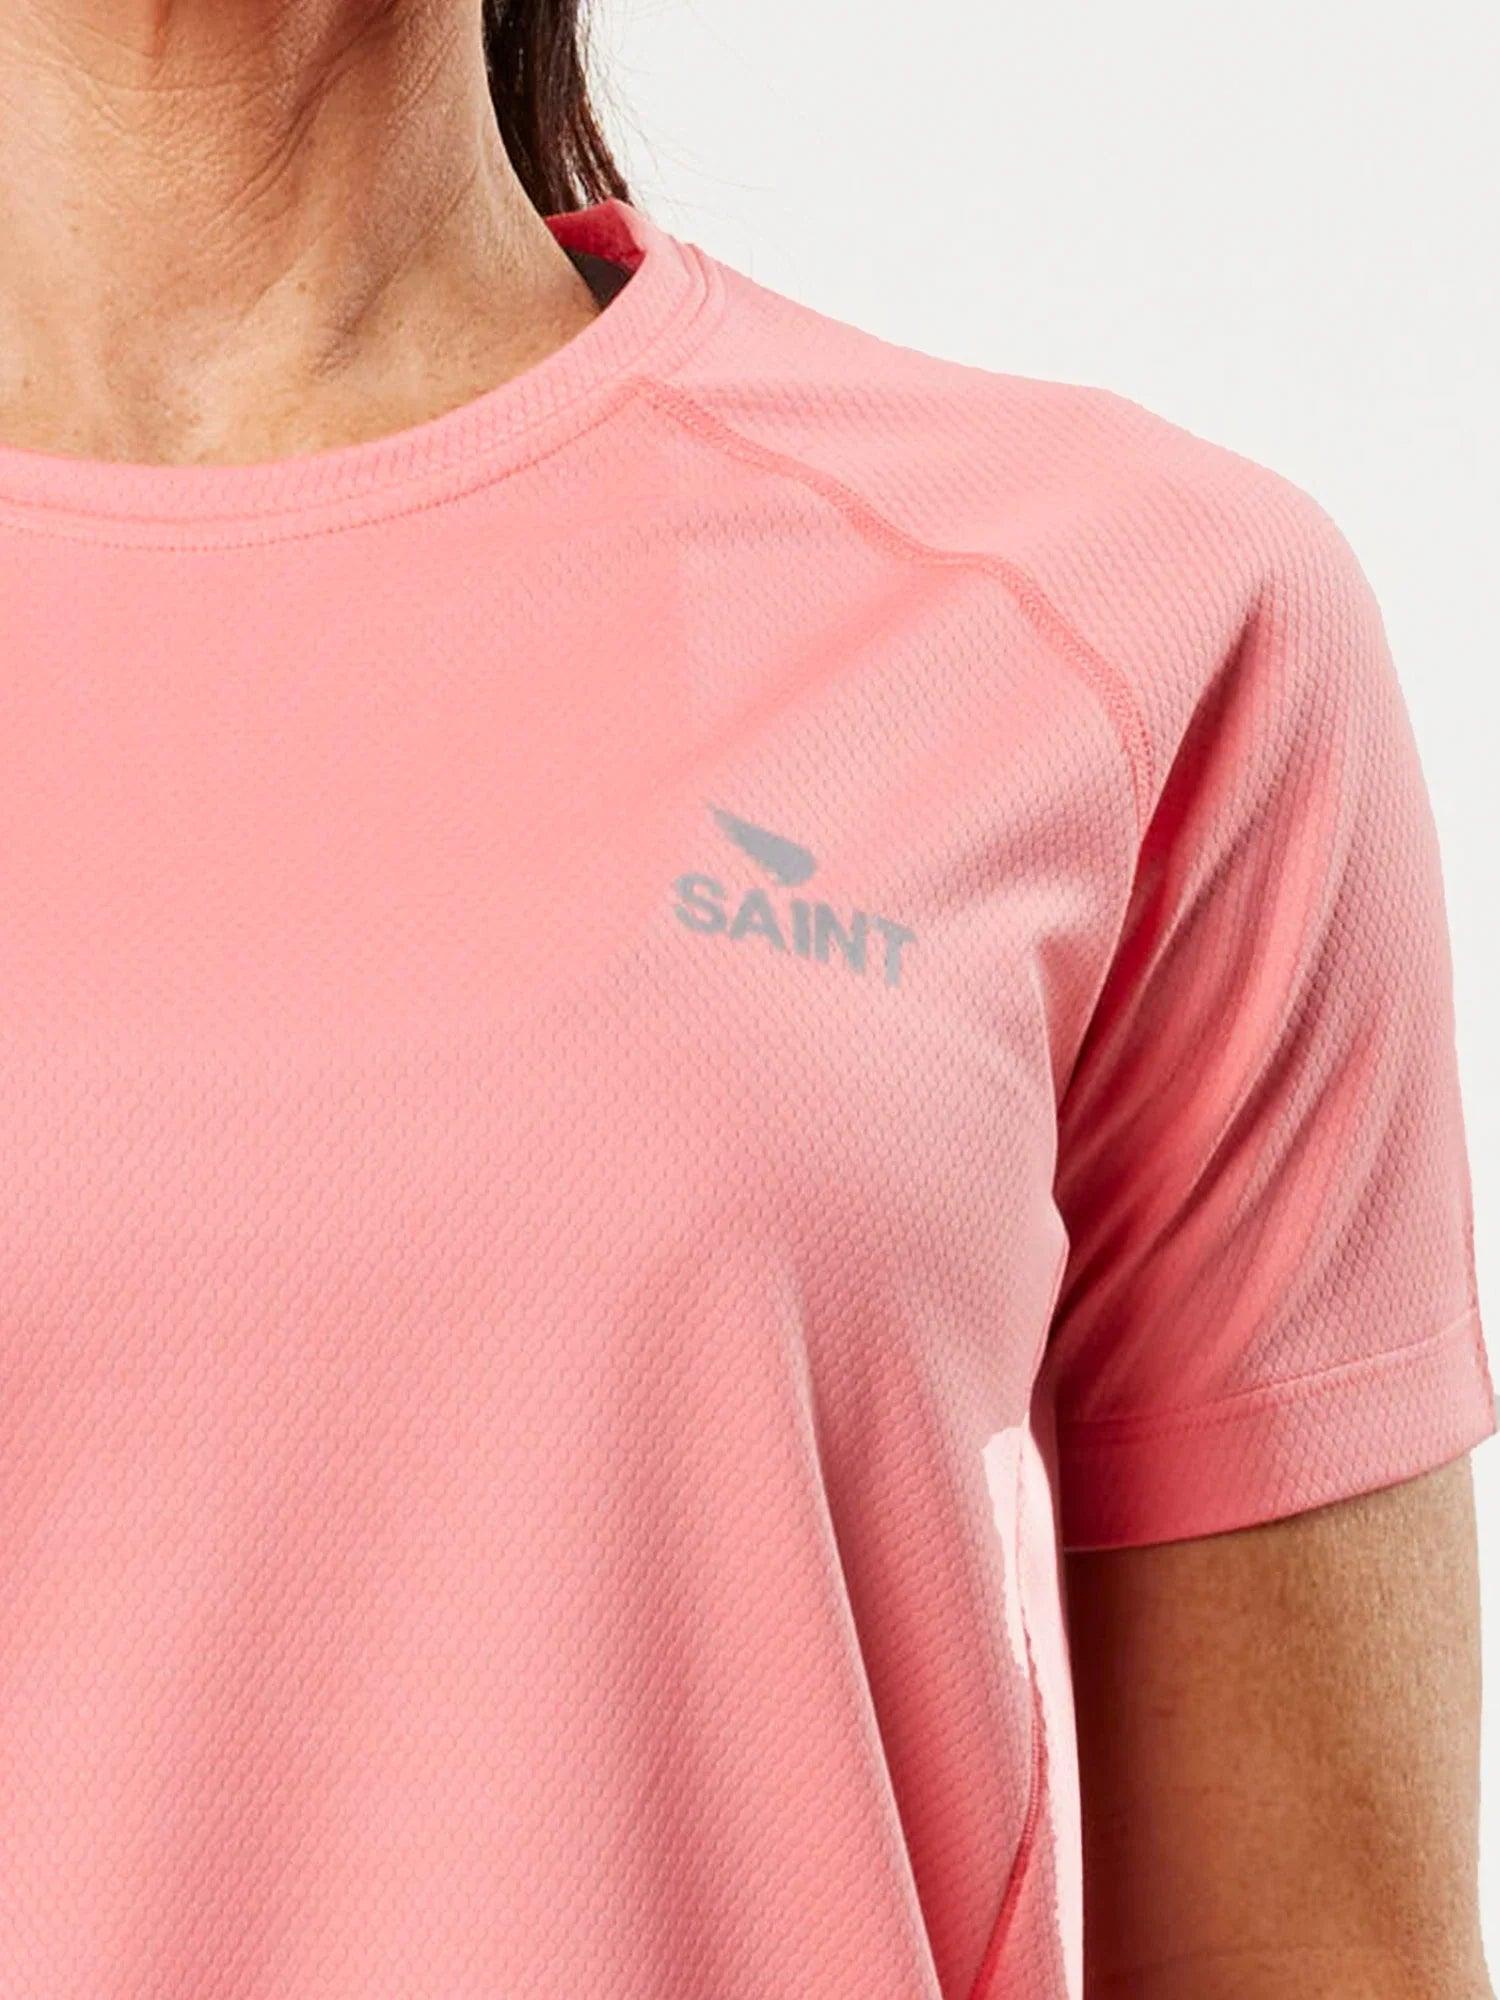 Women's Running T-shirt - Pink | SA1NT LAYERS